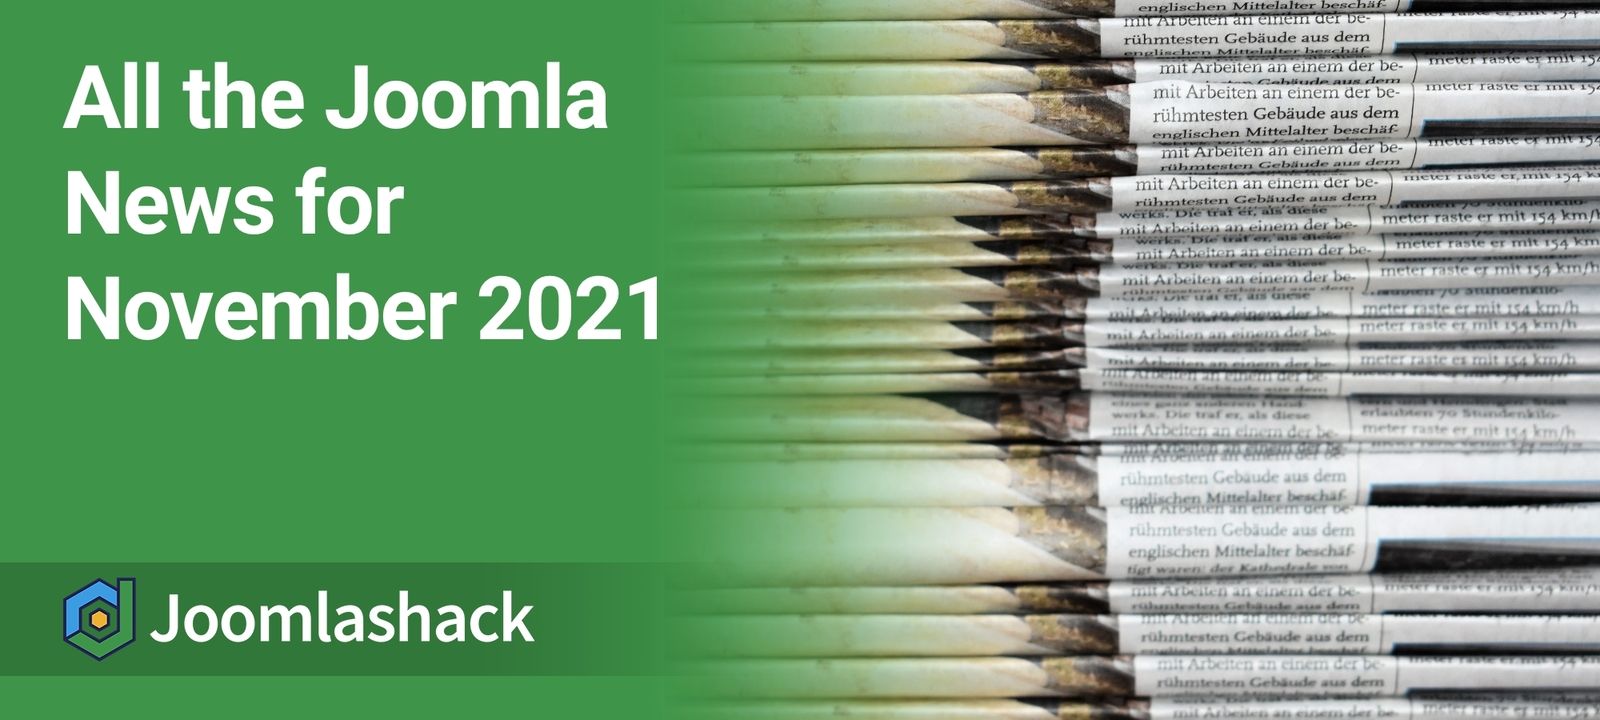 All the Joomla News for November 2021